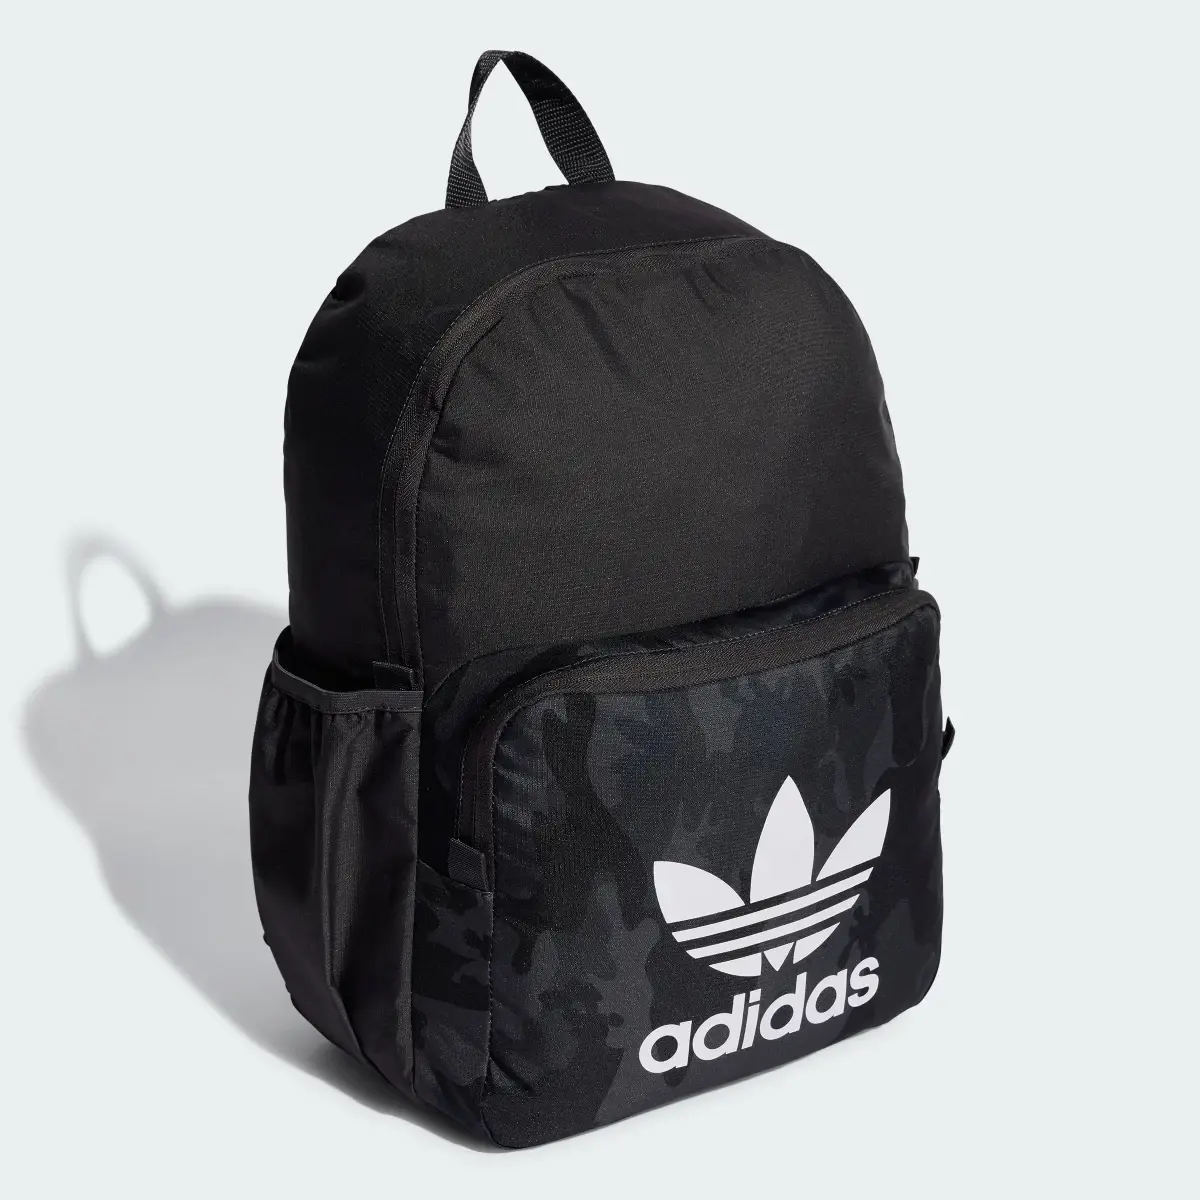 Adidas Camo Graphics Backpack. 2